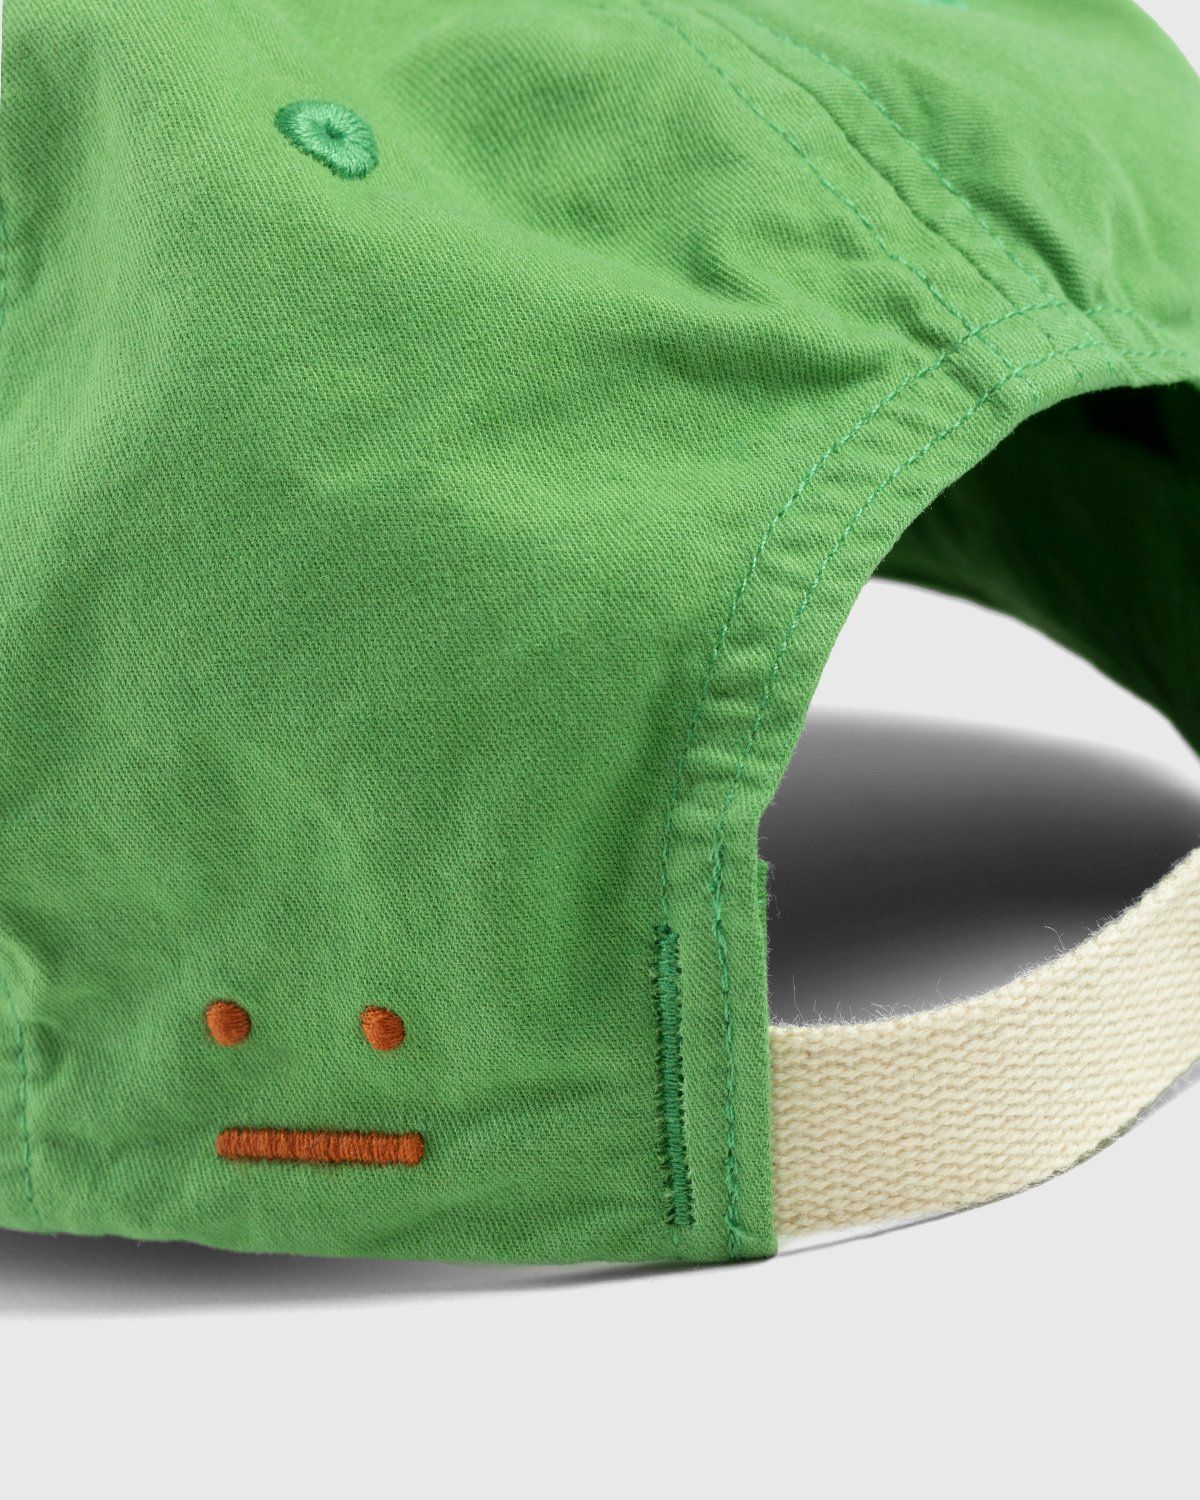 Acne Studios – 6-Panel Baseball Cap Green - Hats - Green - Image 7